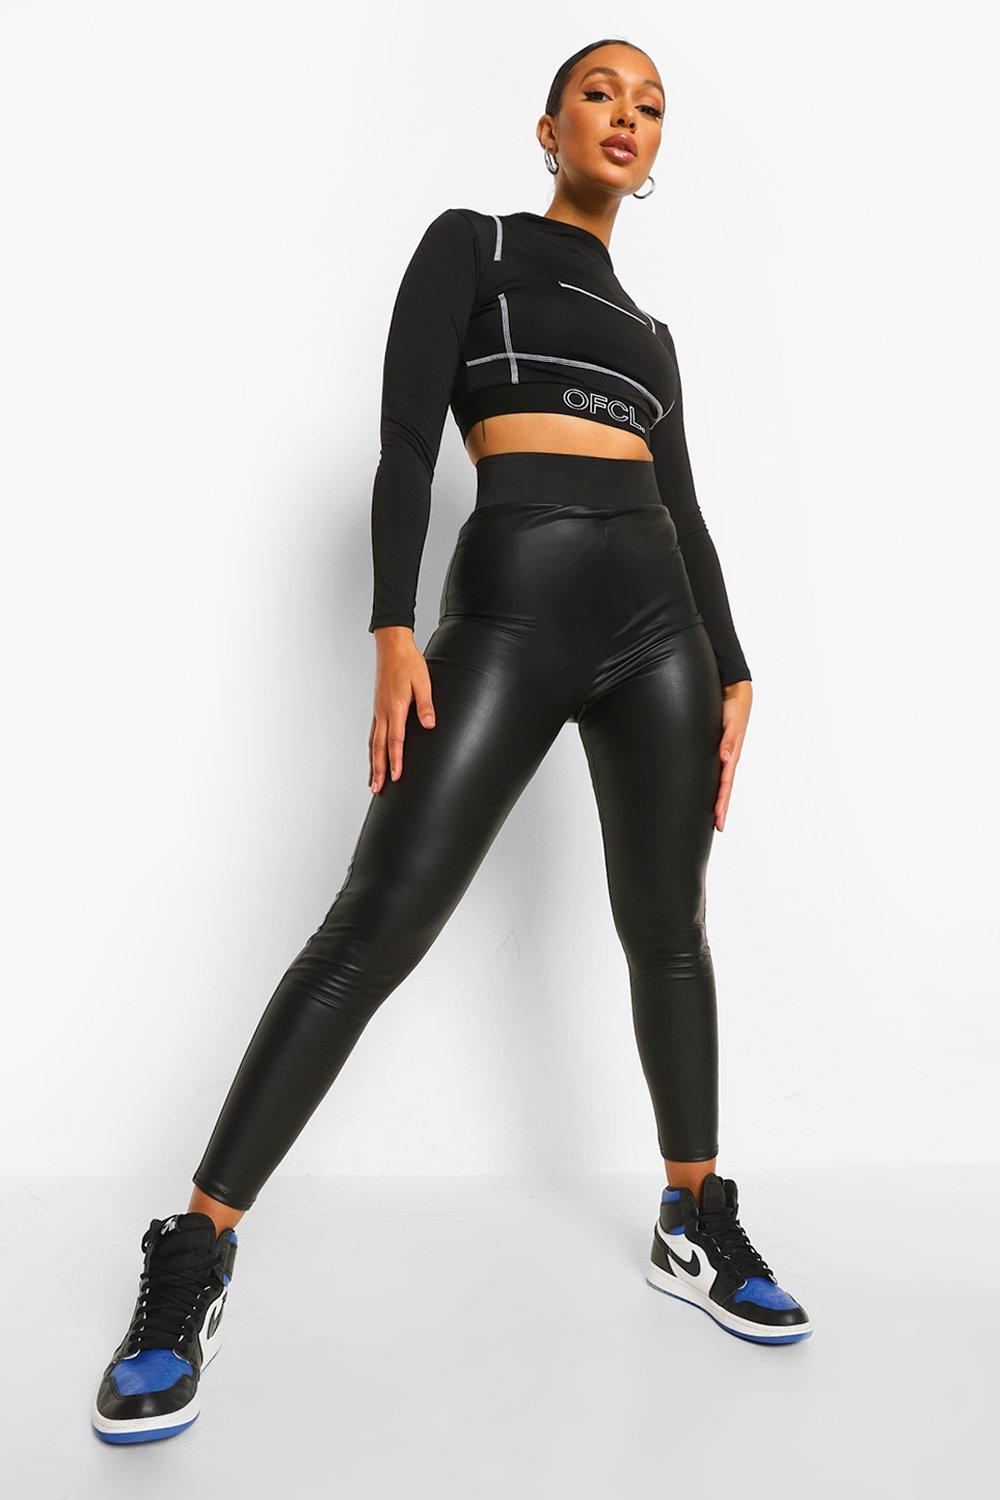 Boohoo Eliza Matte Black Leather Look Leggings, $16, BooHoo